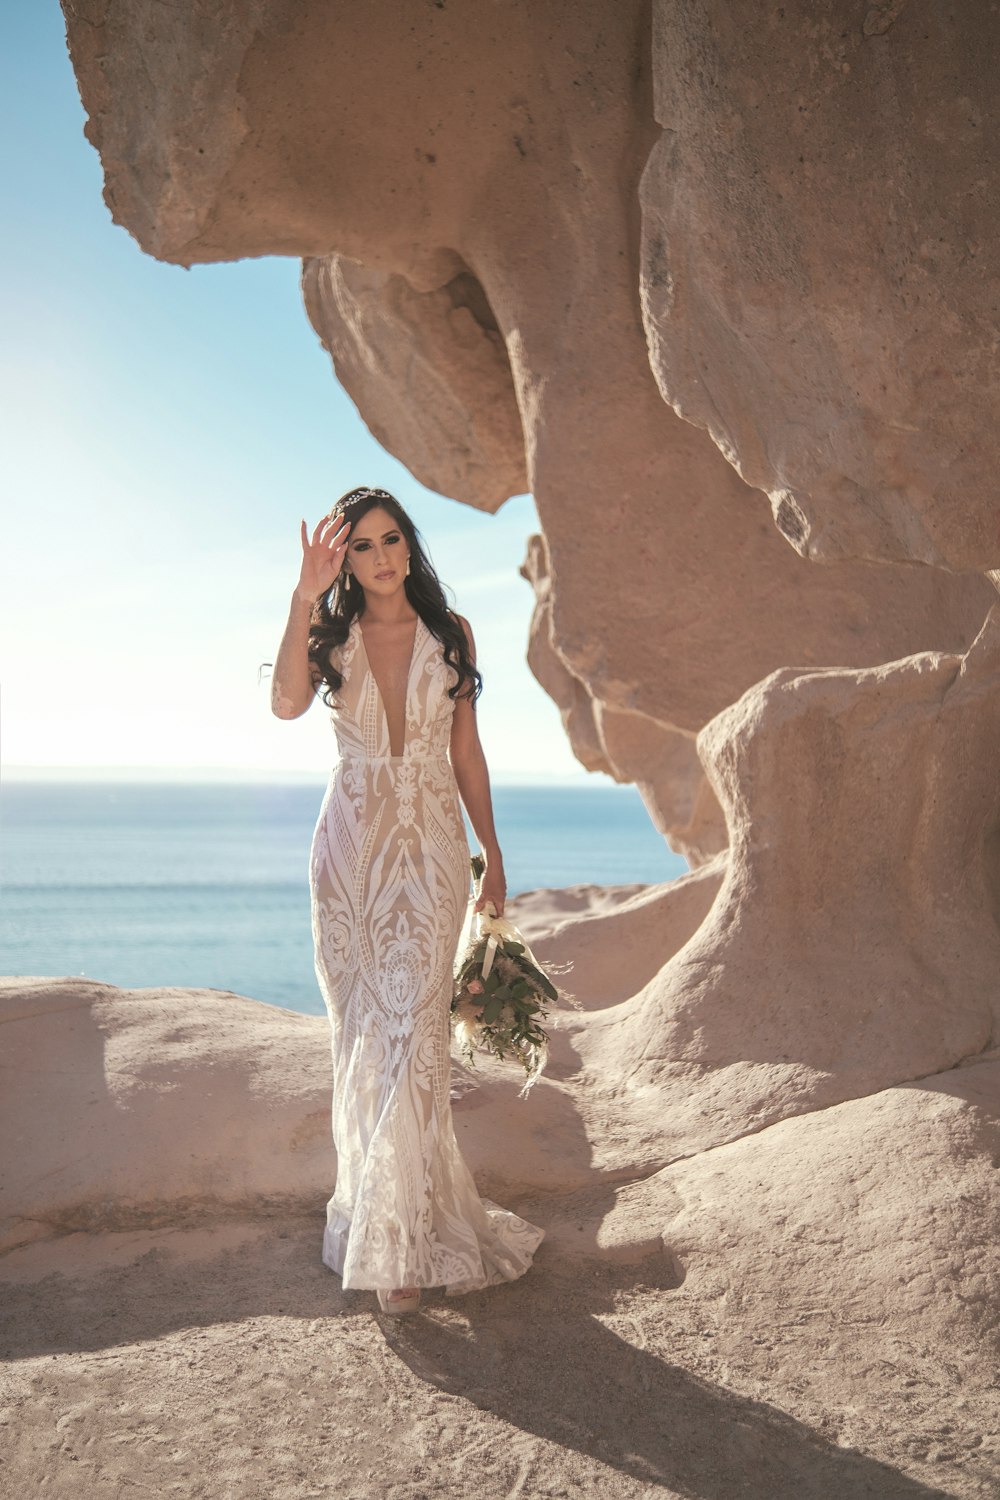 a woman in a wedding dress walking on the beach